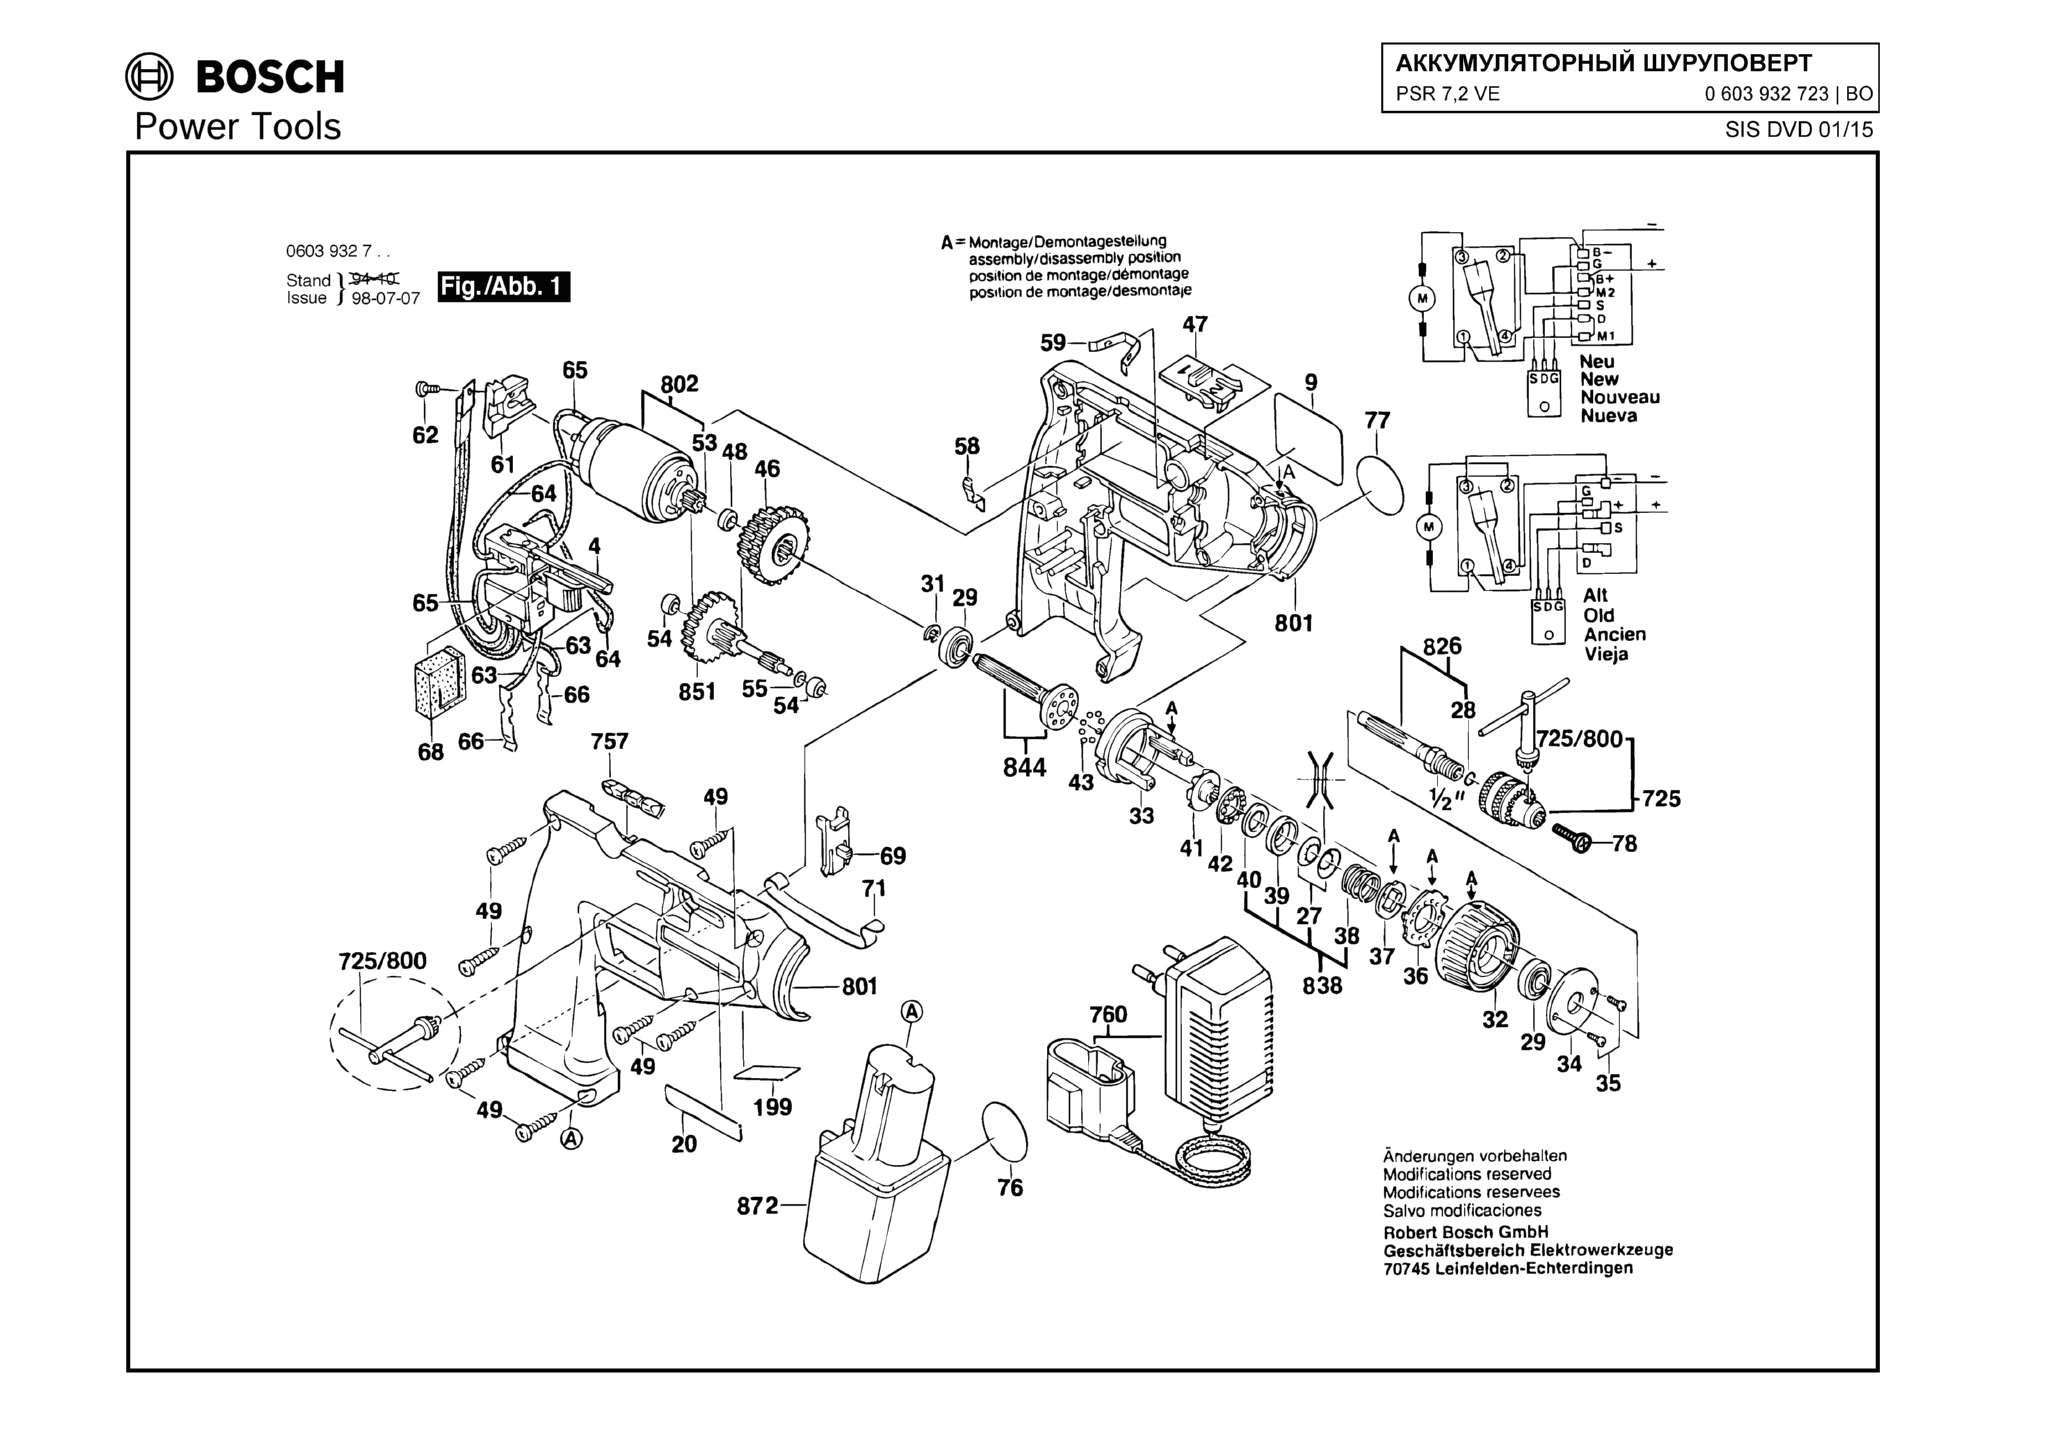 Запчасти, схема и деталировка Bosch PSR 7,2 VE (ТИП 0603932723)